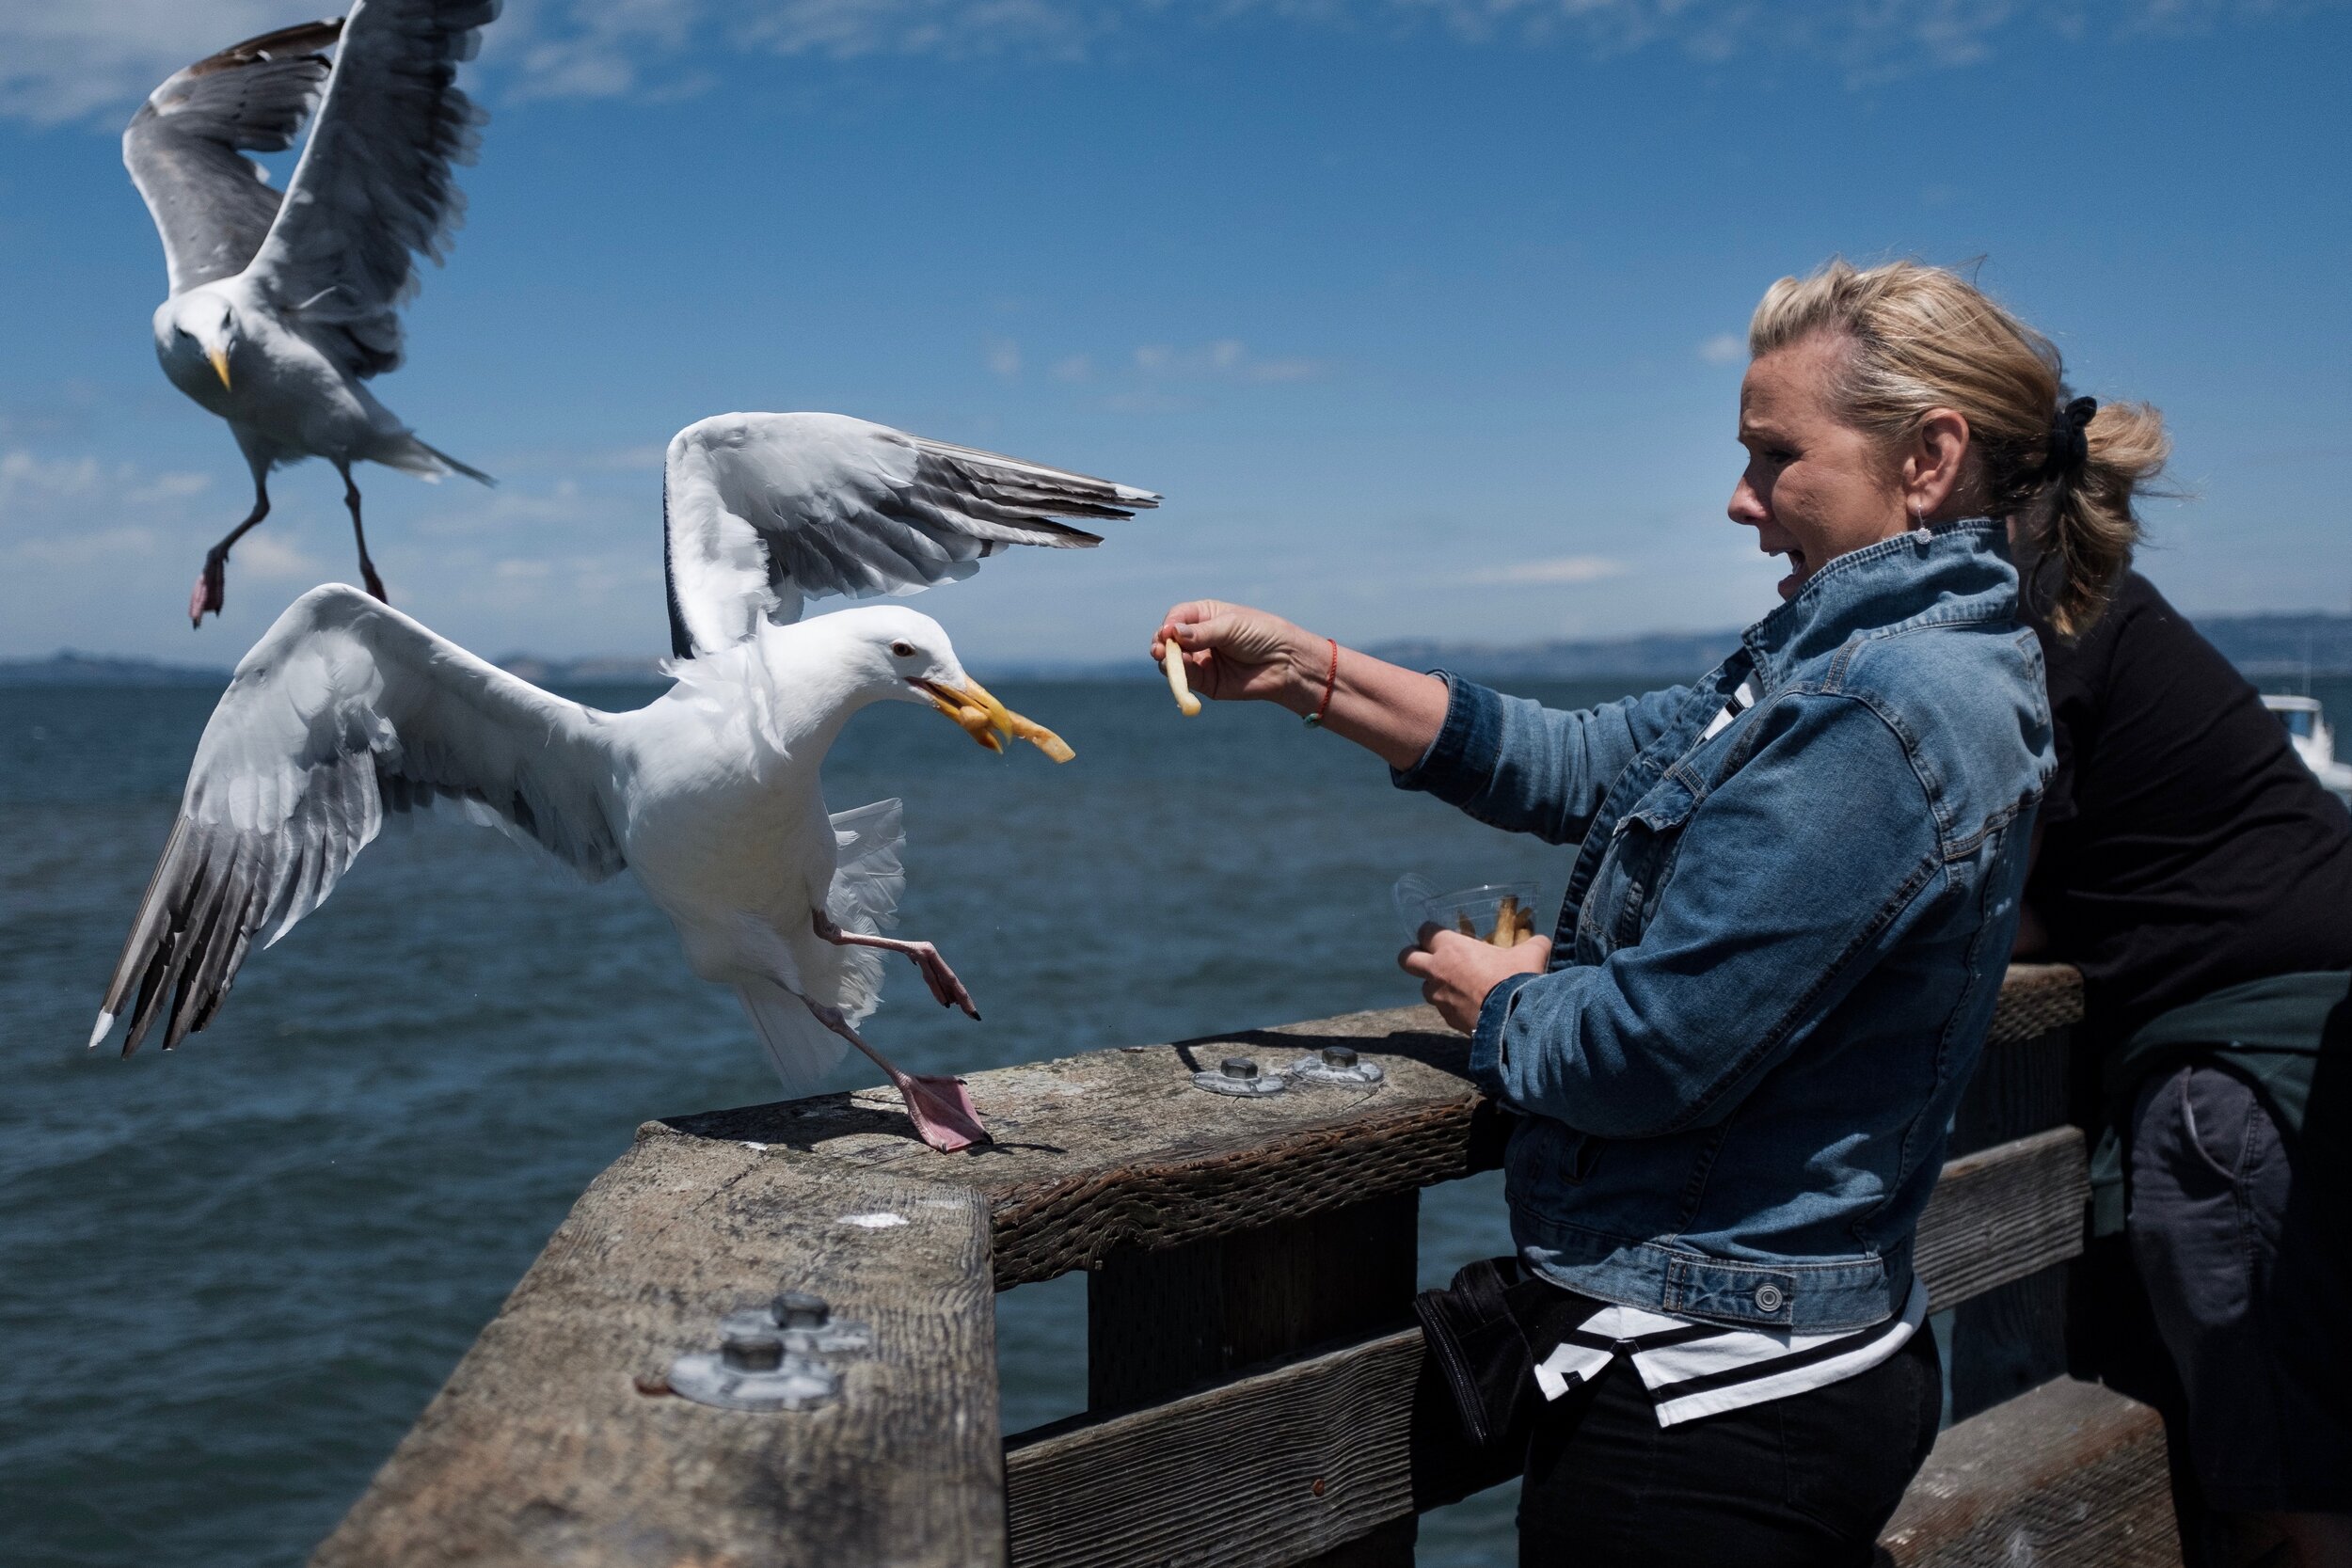  A woman feeds seagulls at San Francisco’s Pier 39.  